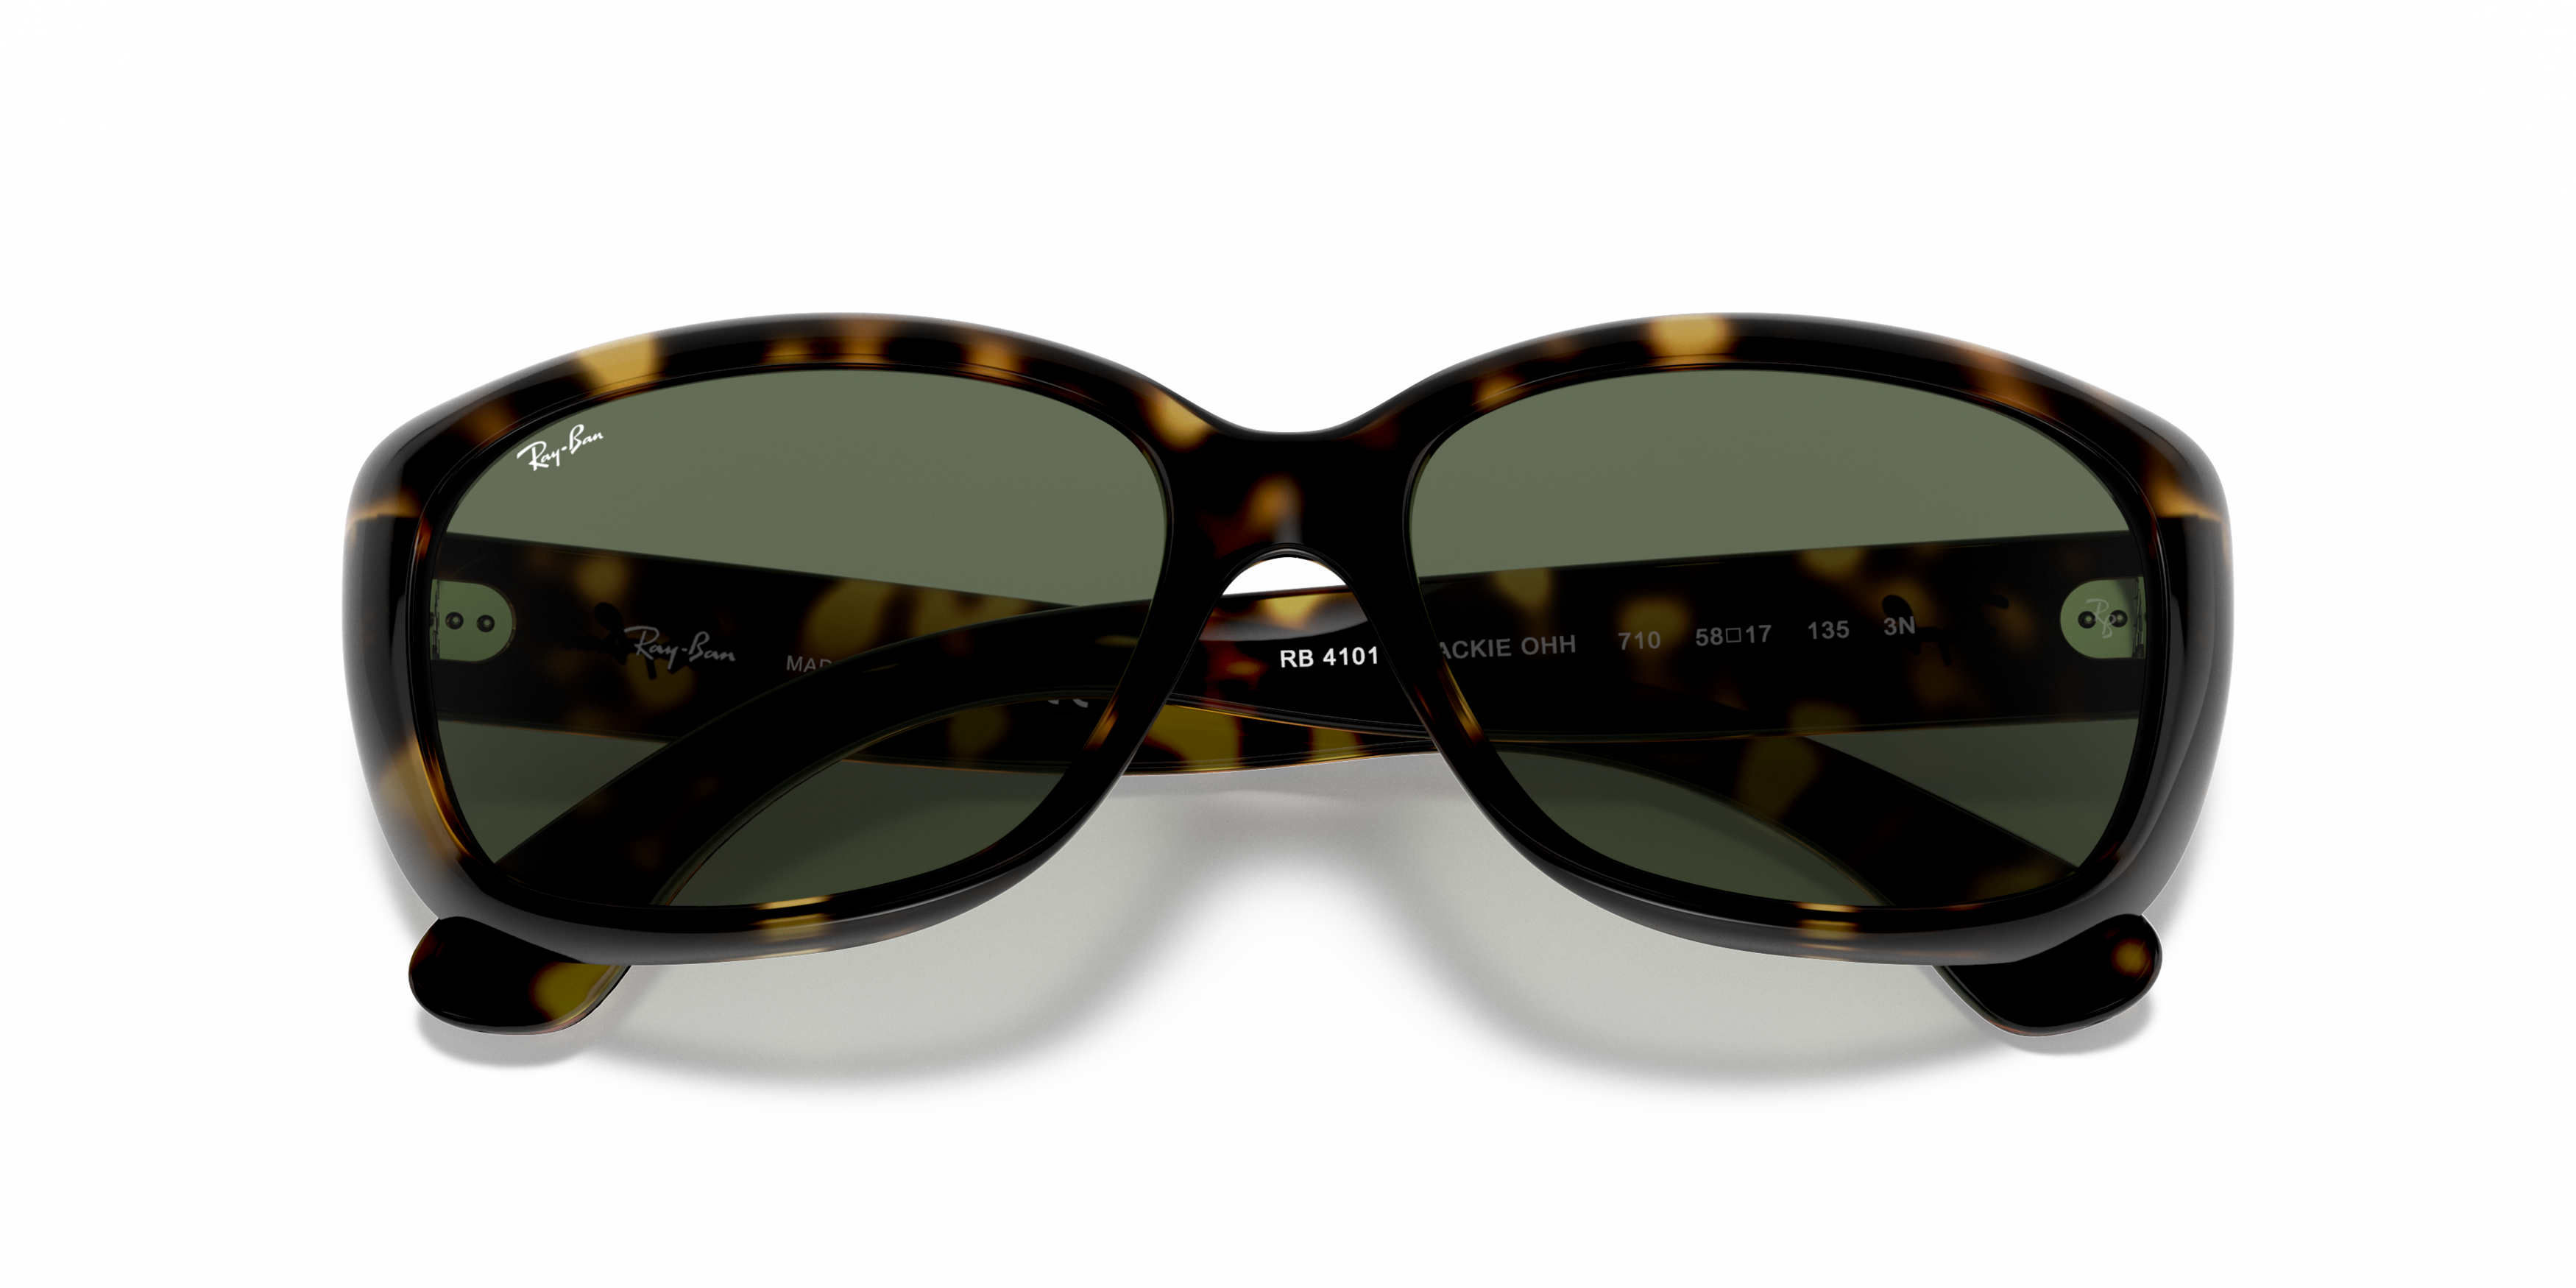 Folded Ray-Ban Jackie Ohh RB 4101 (710) Sunglasses Green / Tortoise Shell